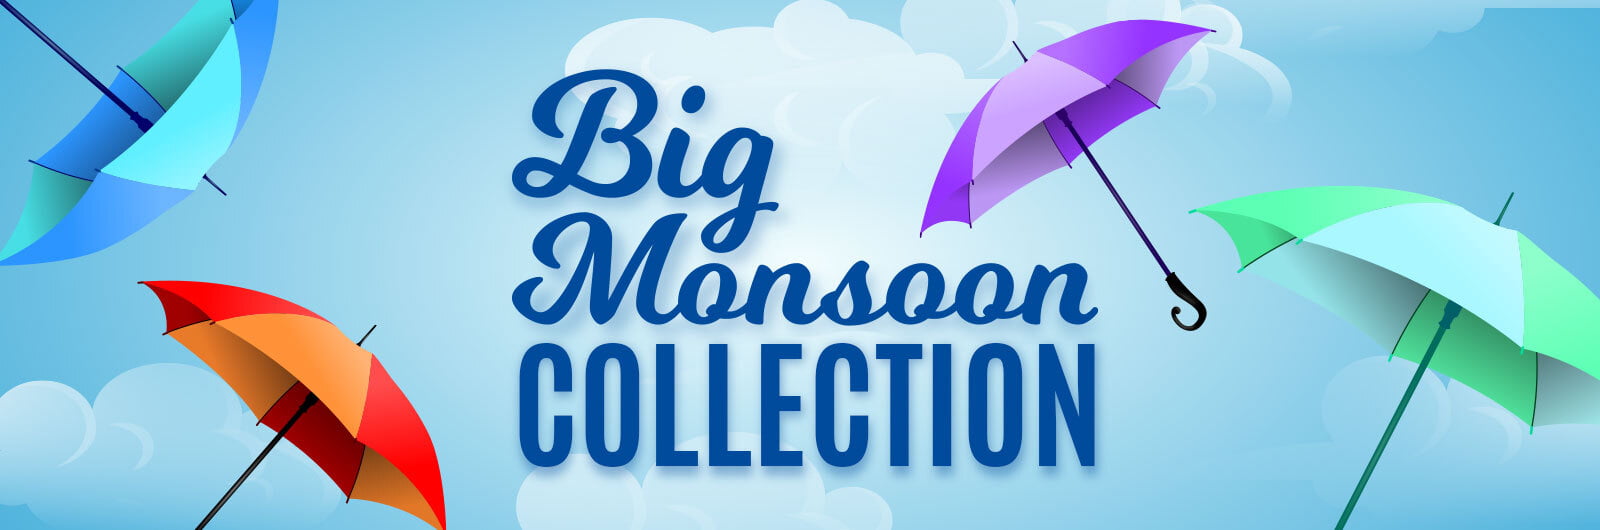 Classic Umbrella monsoon collection